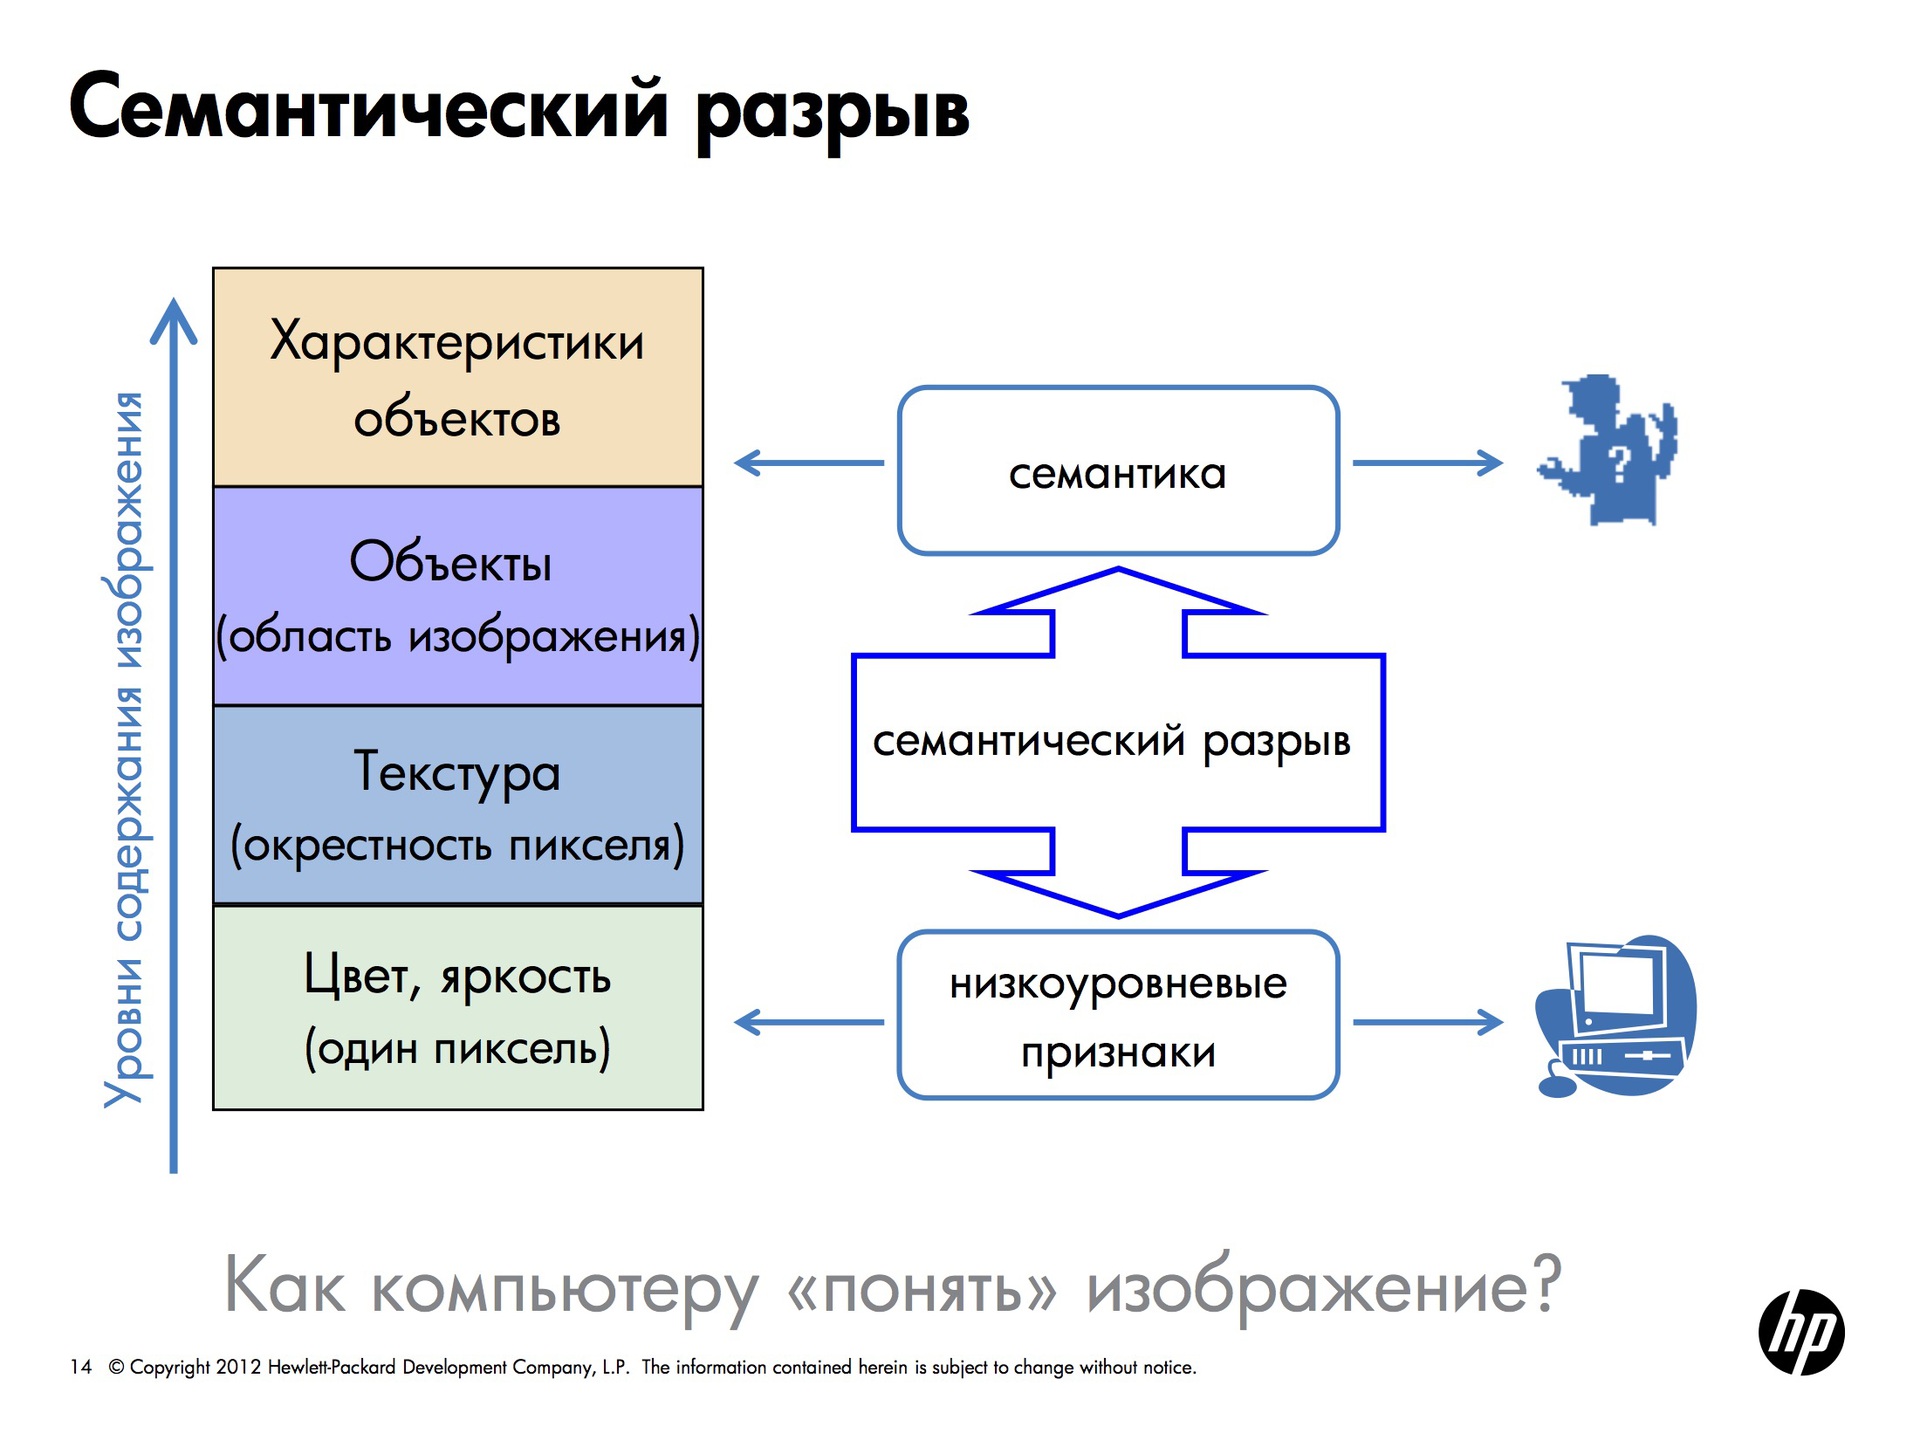 Введение в курс «Анализ изображений и видео». Лекции от Яндекса - 3